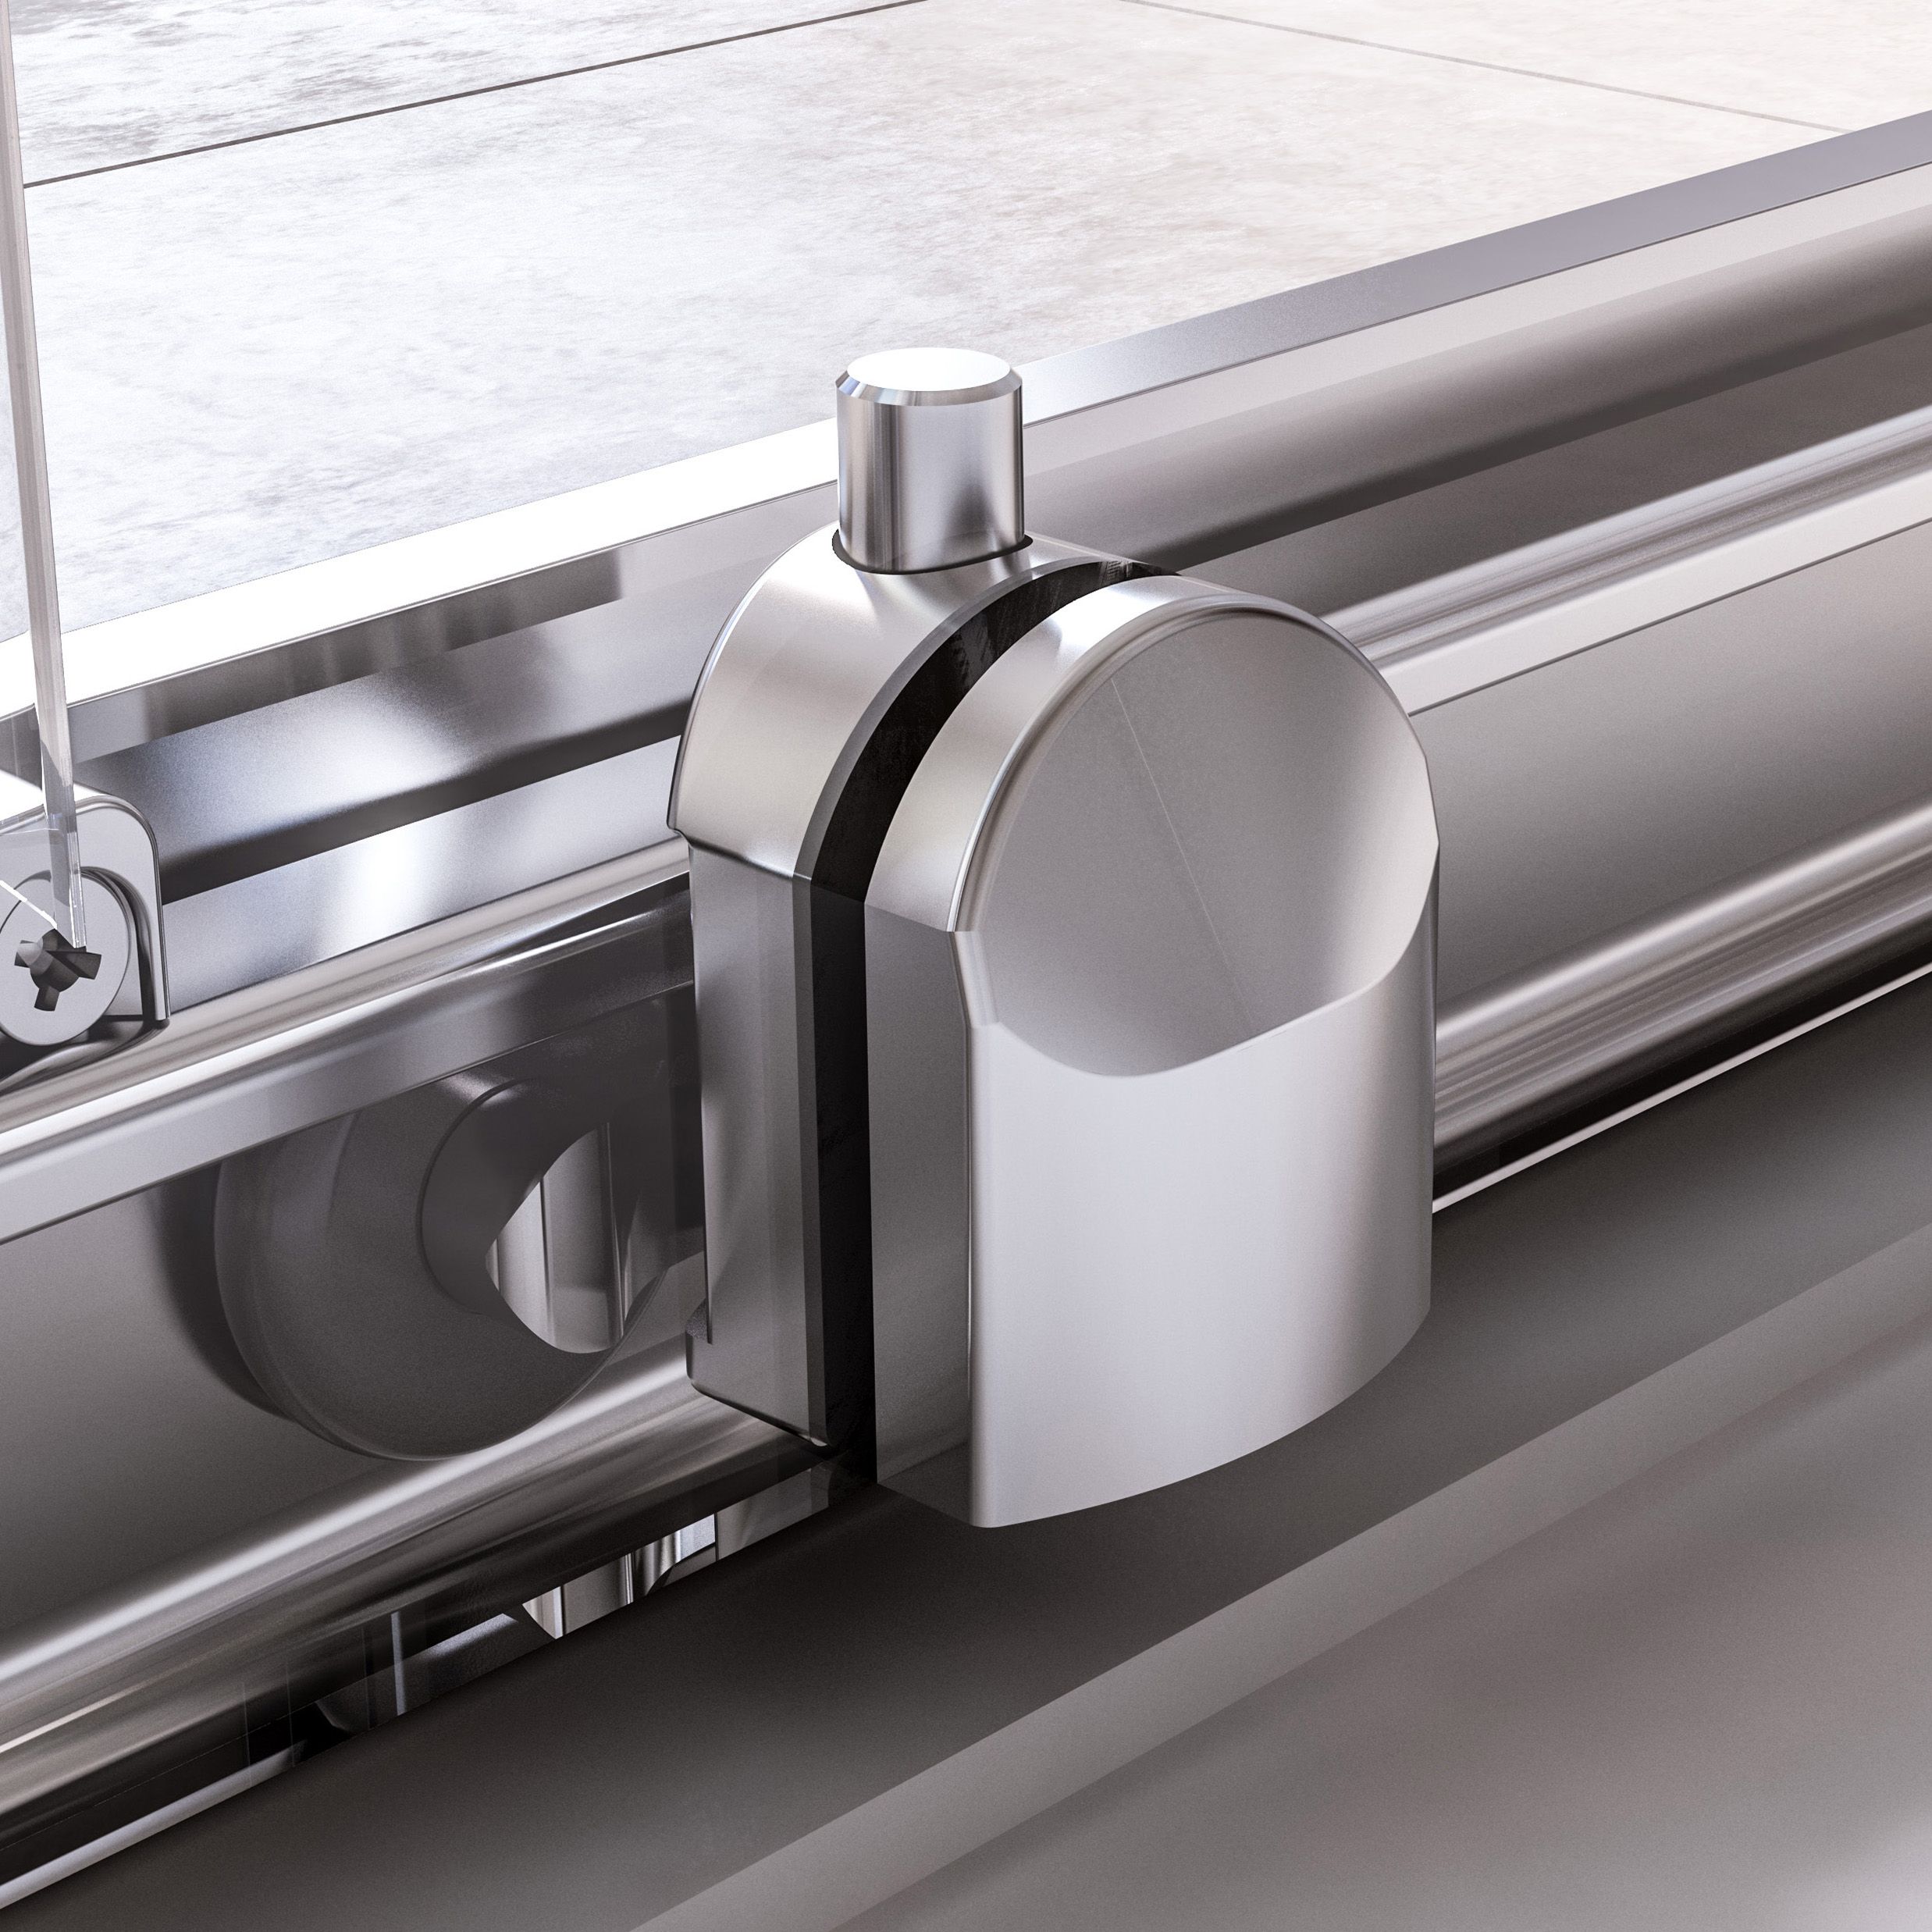 Aqualux Edge 6 Silver effect Left or right Rectangular Shower Enclosure & tray with Sliding door (H)193.5cm (W)120cm (D)76cm